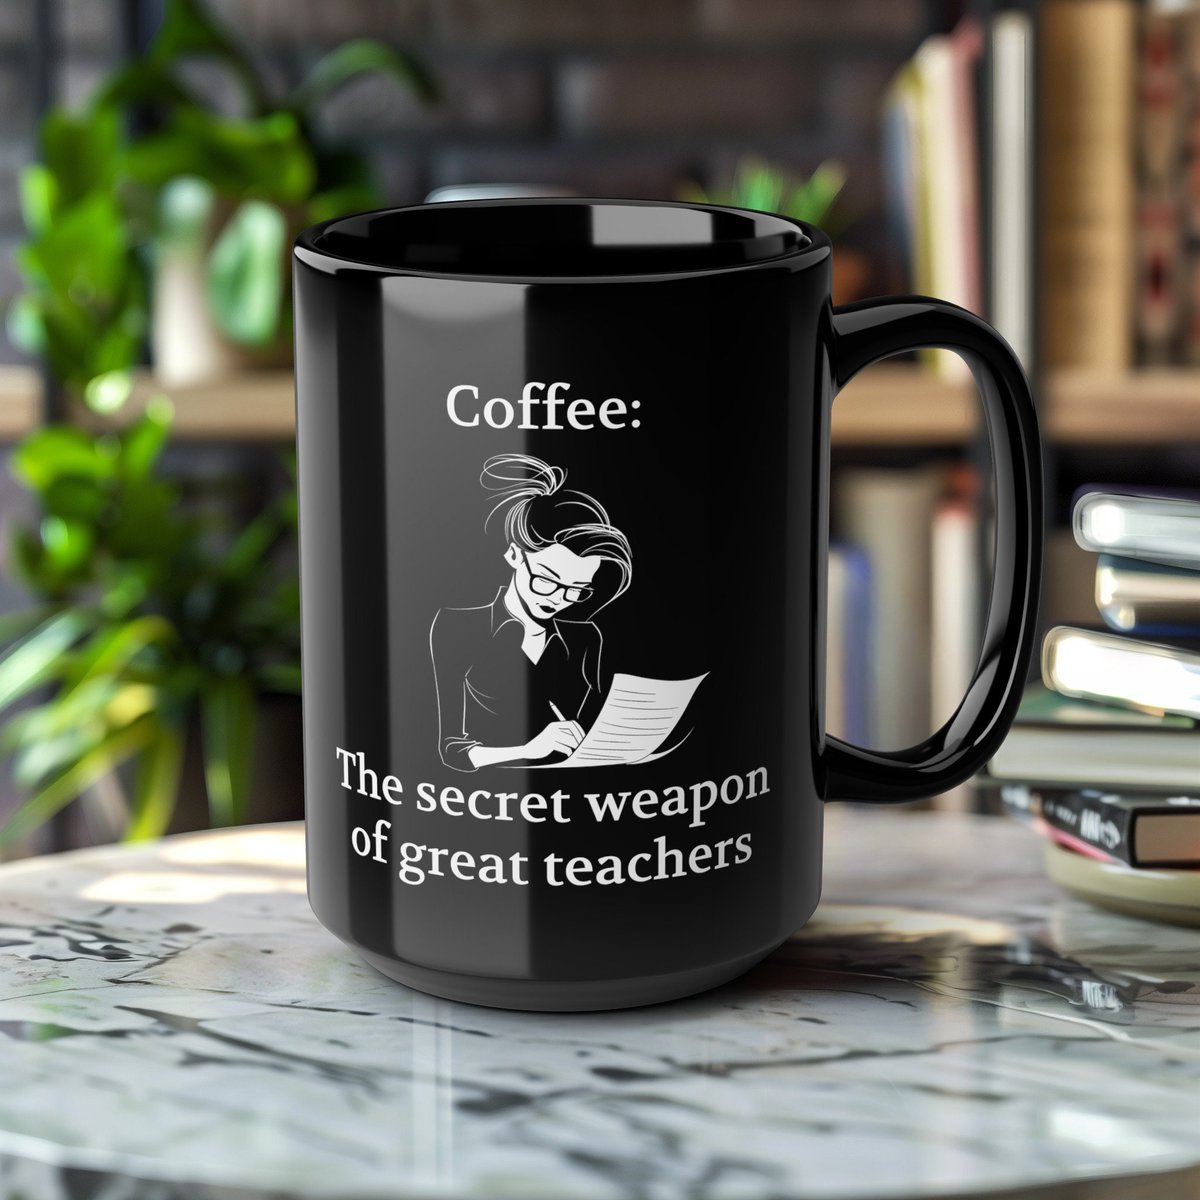 Coffee: the secret weapon of great teachers, by MountainBrewedBliss etsy.me/3UjaWdr via @Etsy 
#CoffeeLovers #coffeetime #GiftIdeas #CaffeineFix #CoffeeMugs  #teacher